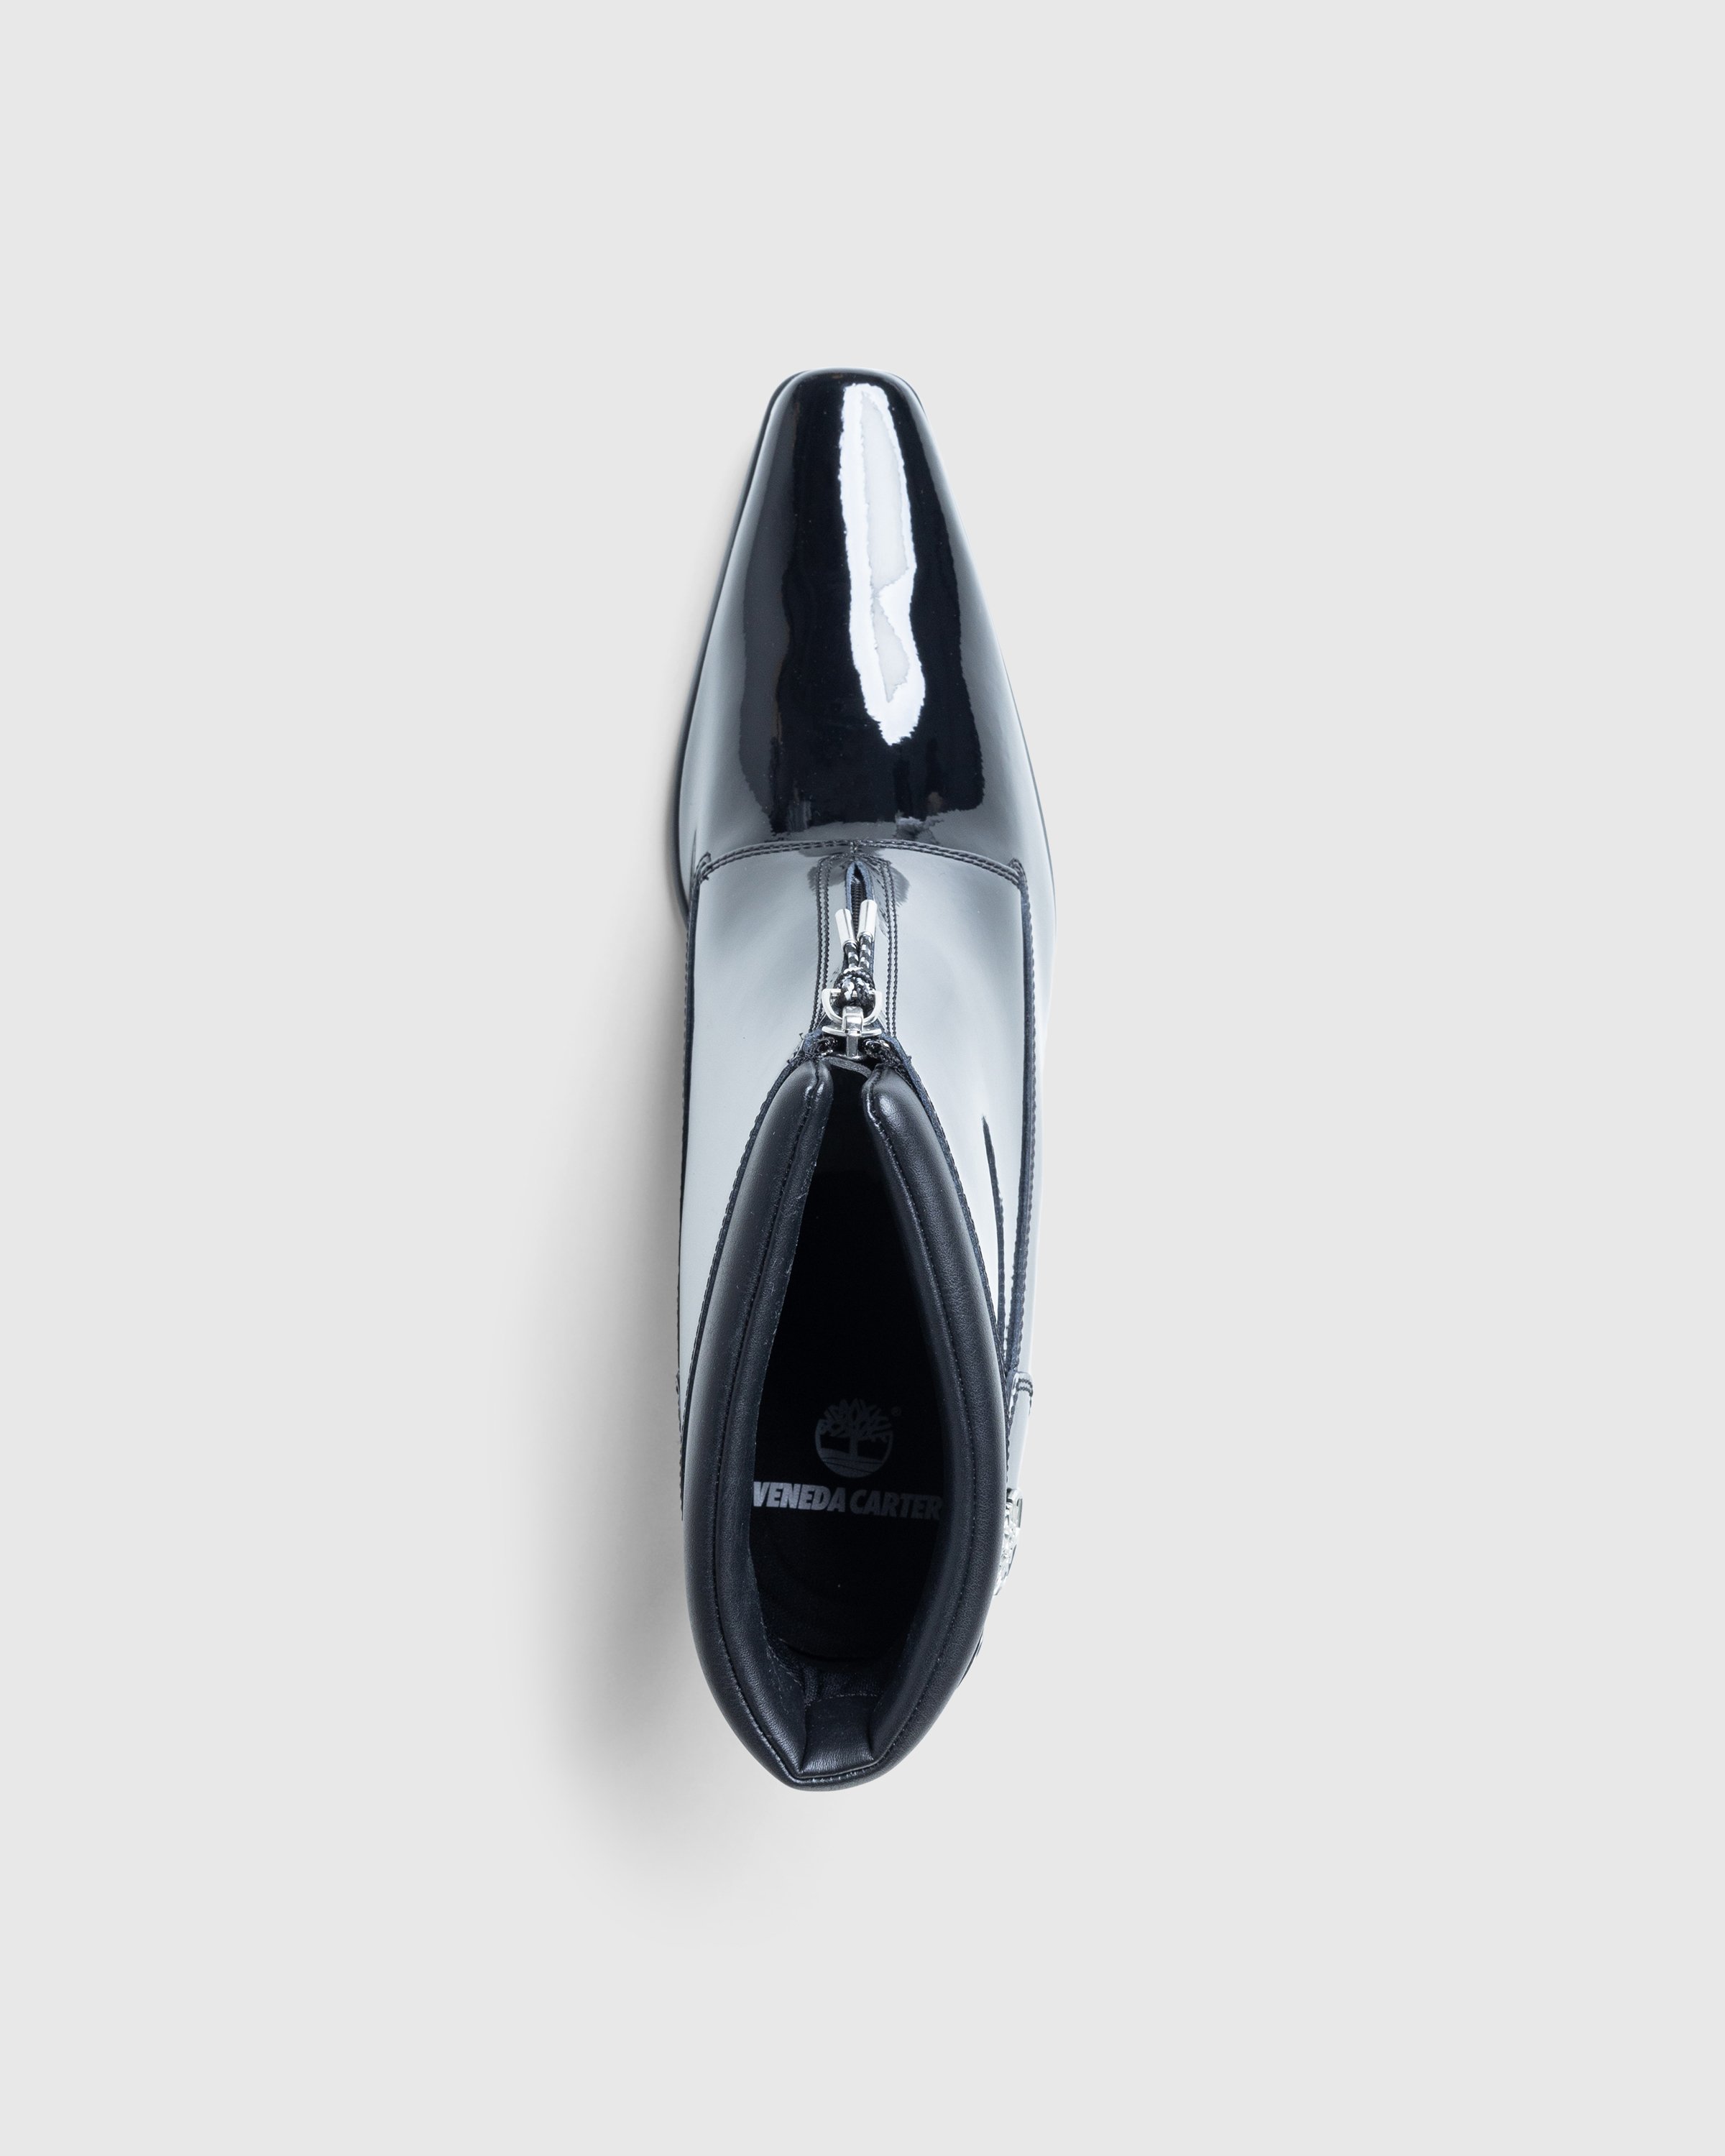 Veneda Carter x Timberland - MID ZIP UP BOOT BLACK PATENT LEATHER - Footwear - Black - Image 5